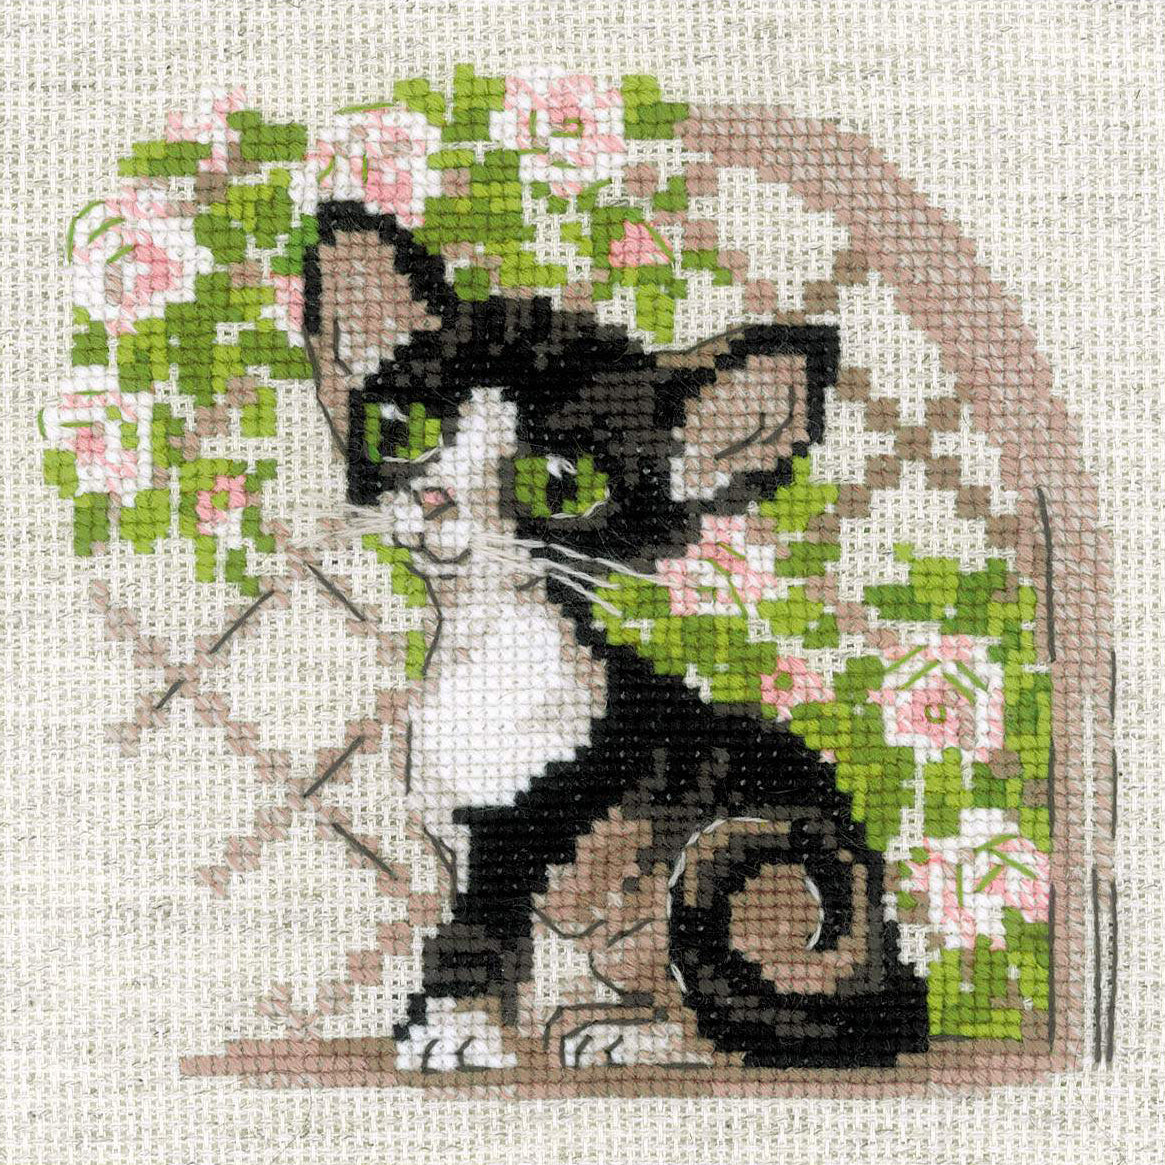 Cross Stitch Embroidery Kit - "Cornish Rex Kitten" - Riolis 2121